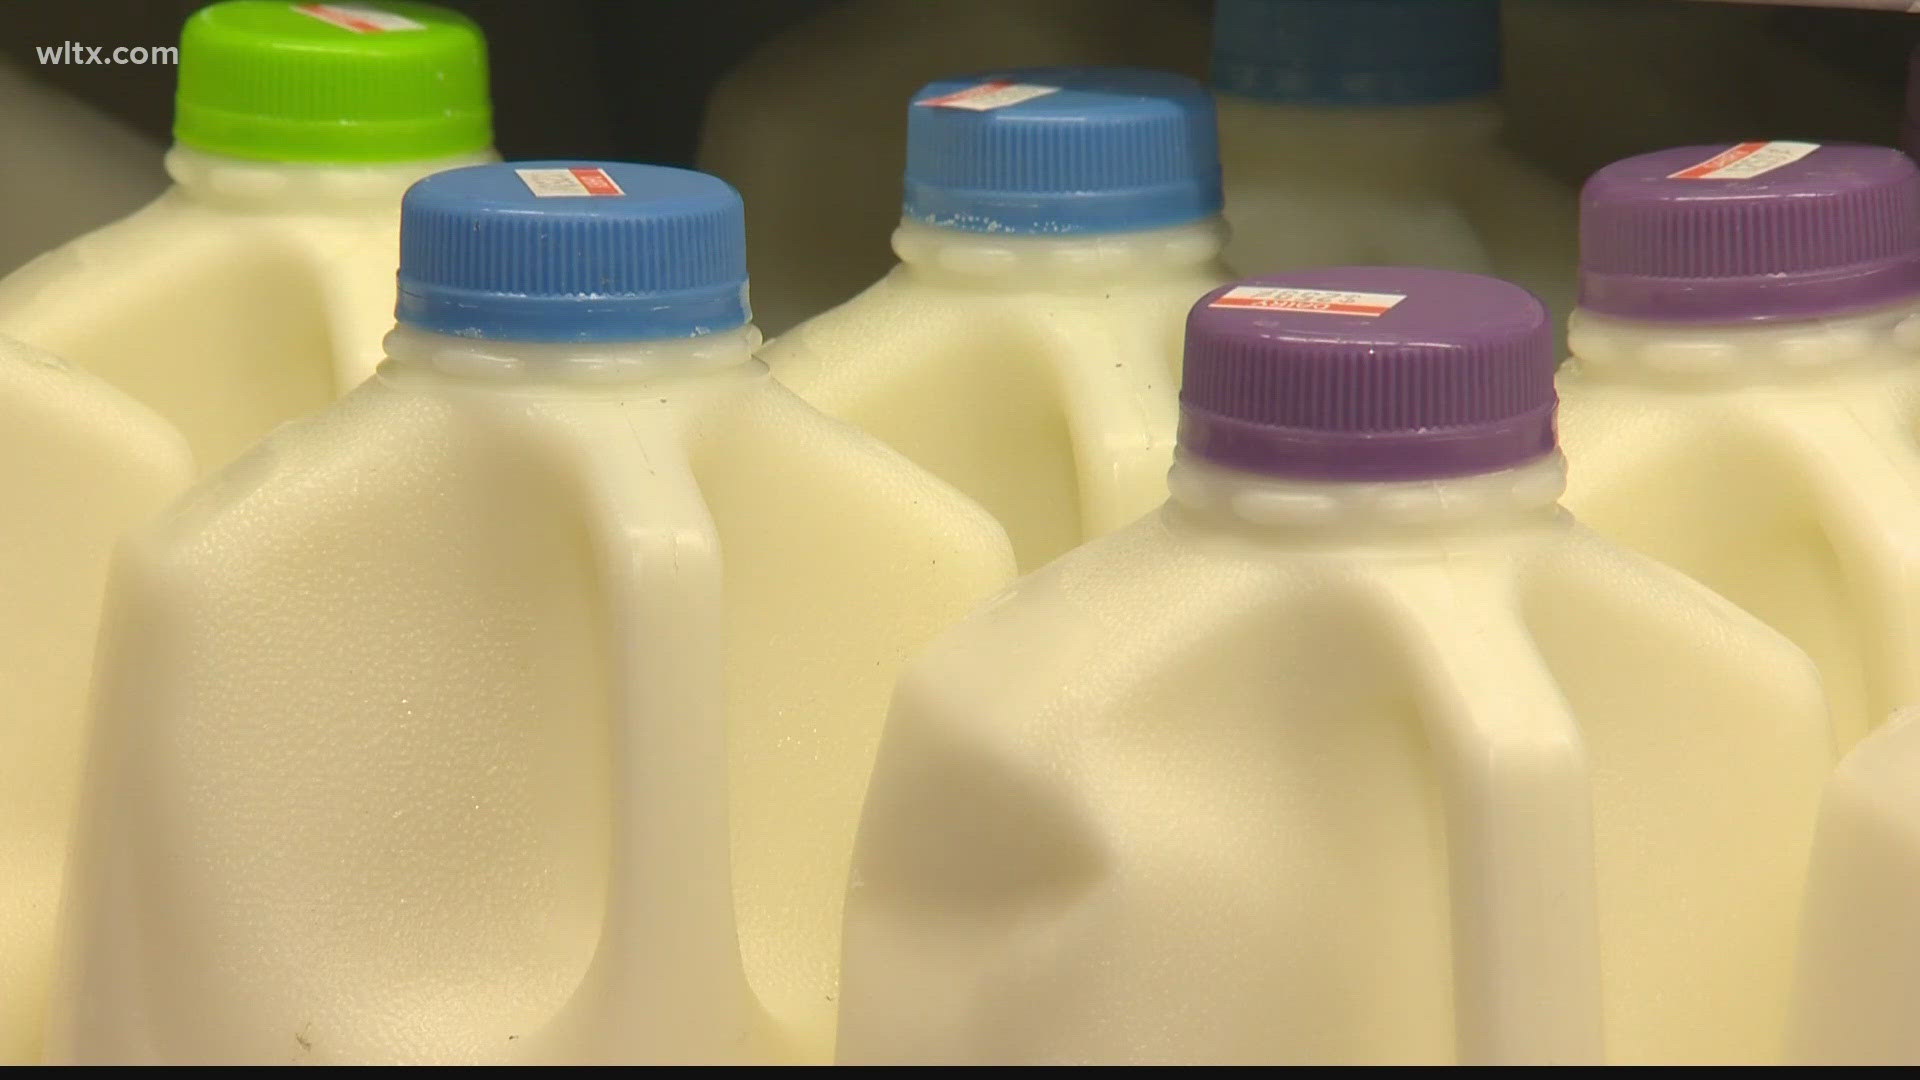 The FDA has found evidence of the bird flu virus in grocery store milk.